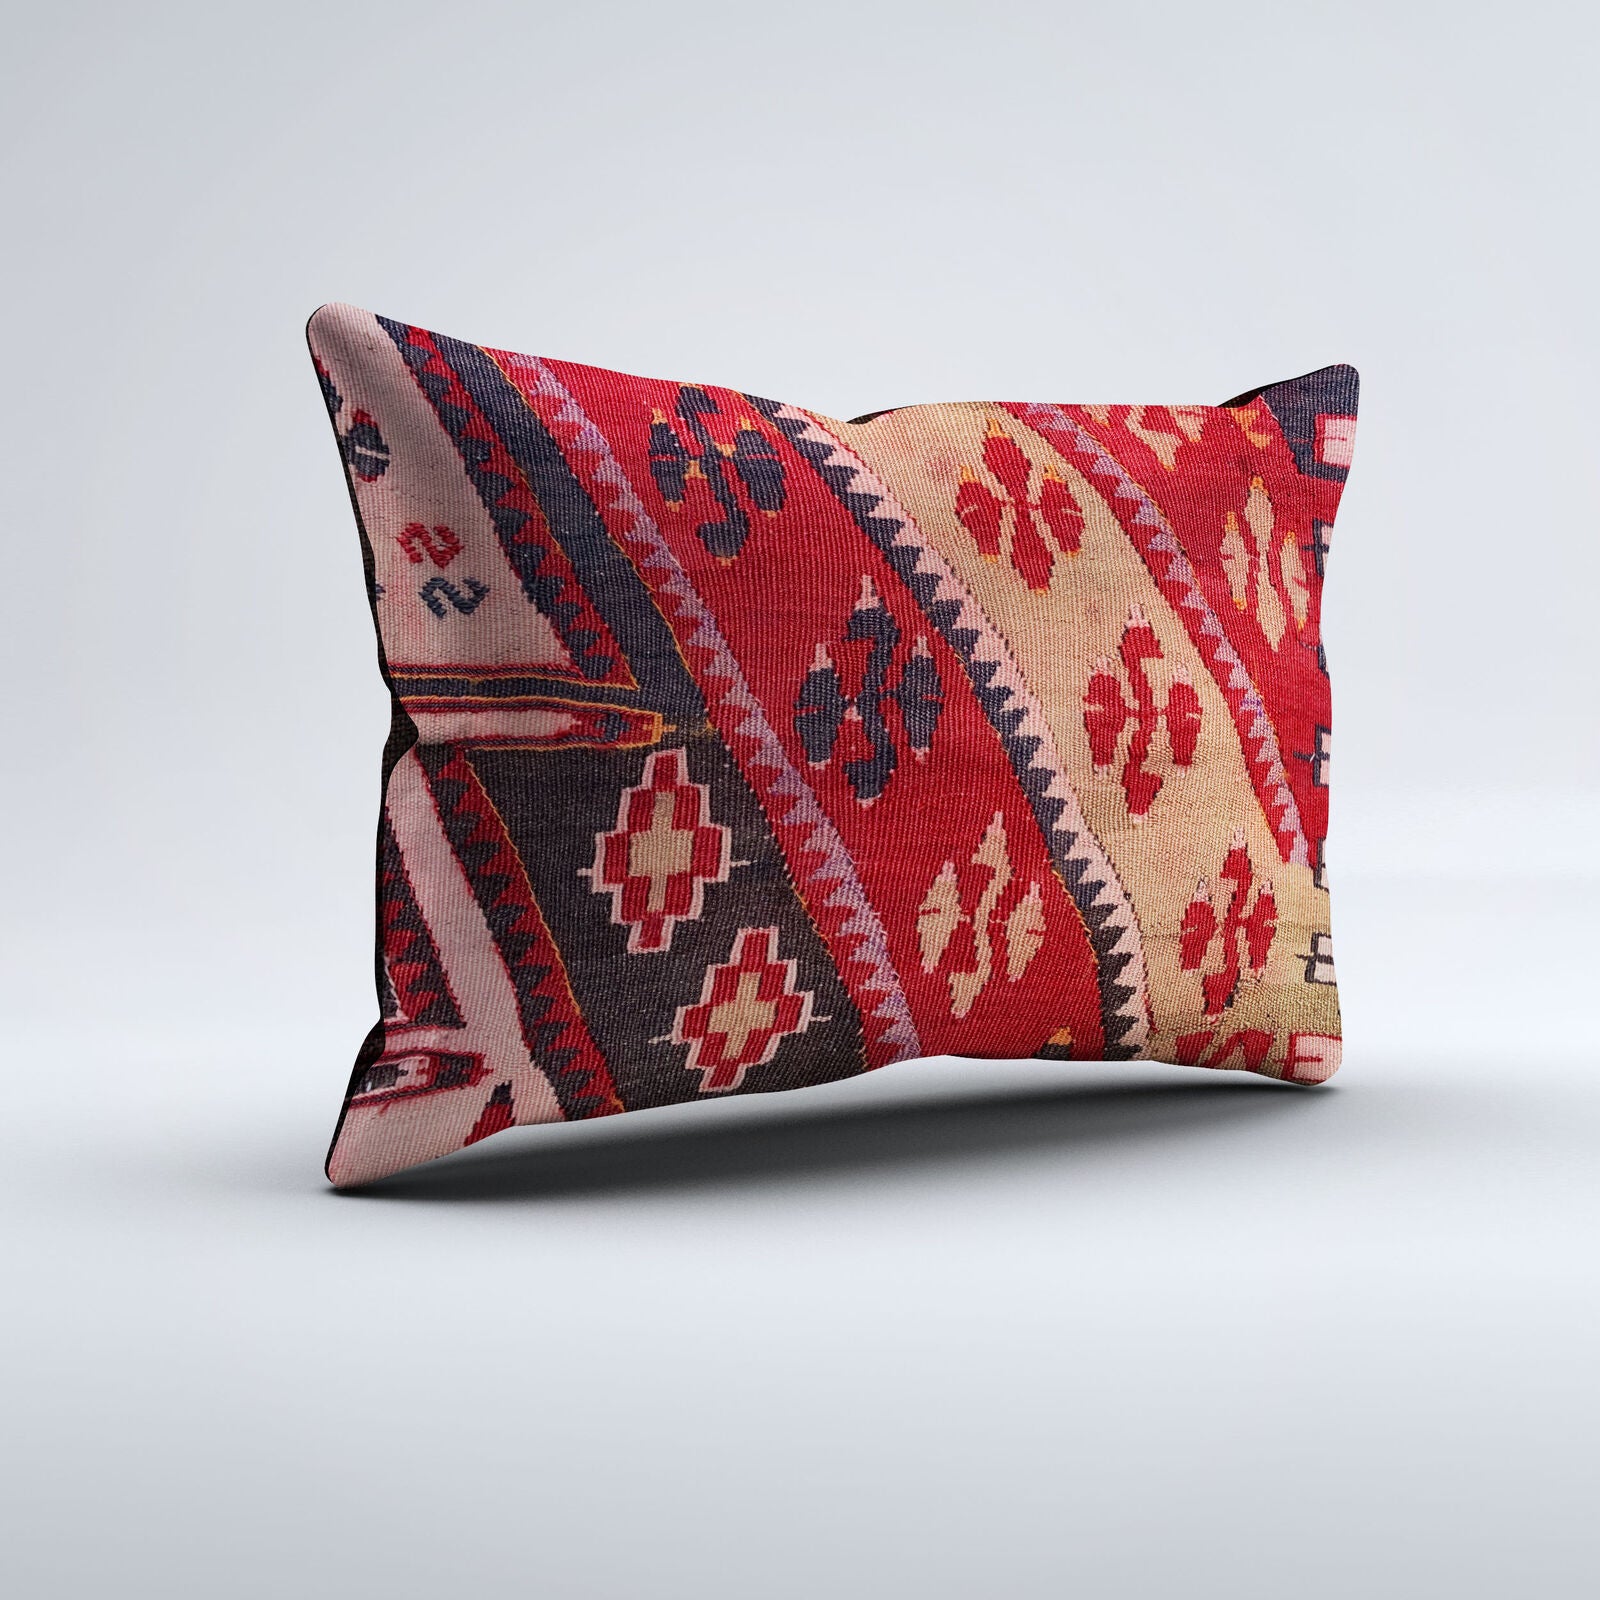 Vintage Turkish Kilim Cushion Cover 60x40 cm Square Wool Kelim Pillowcase 64691